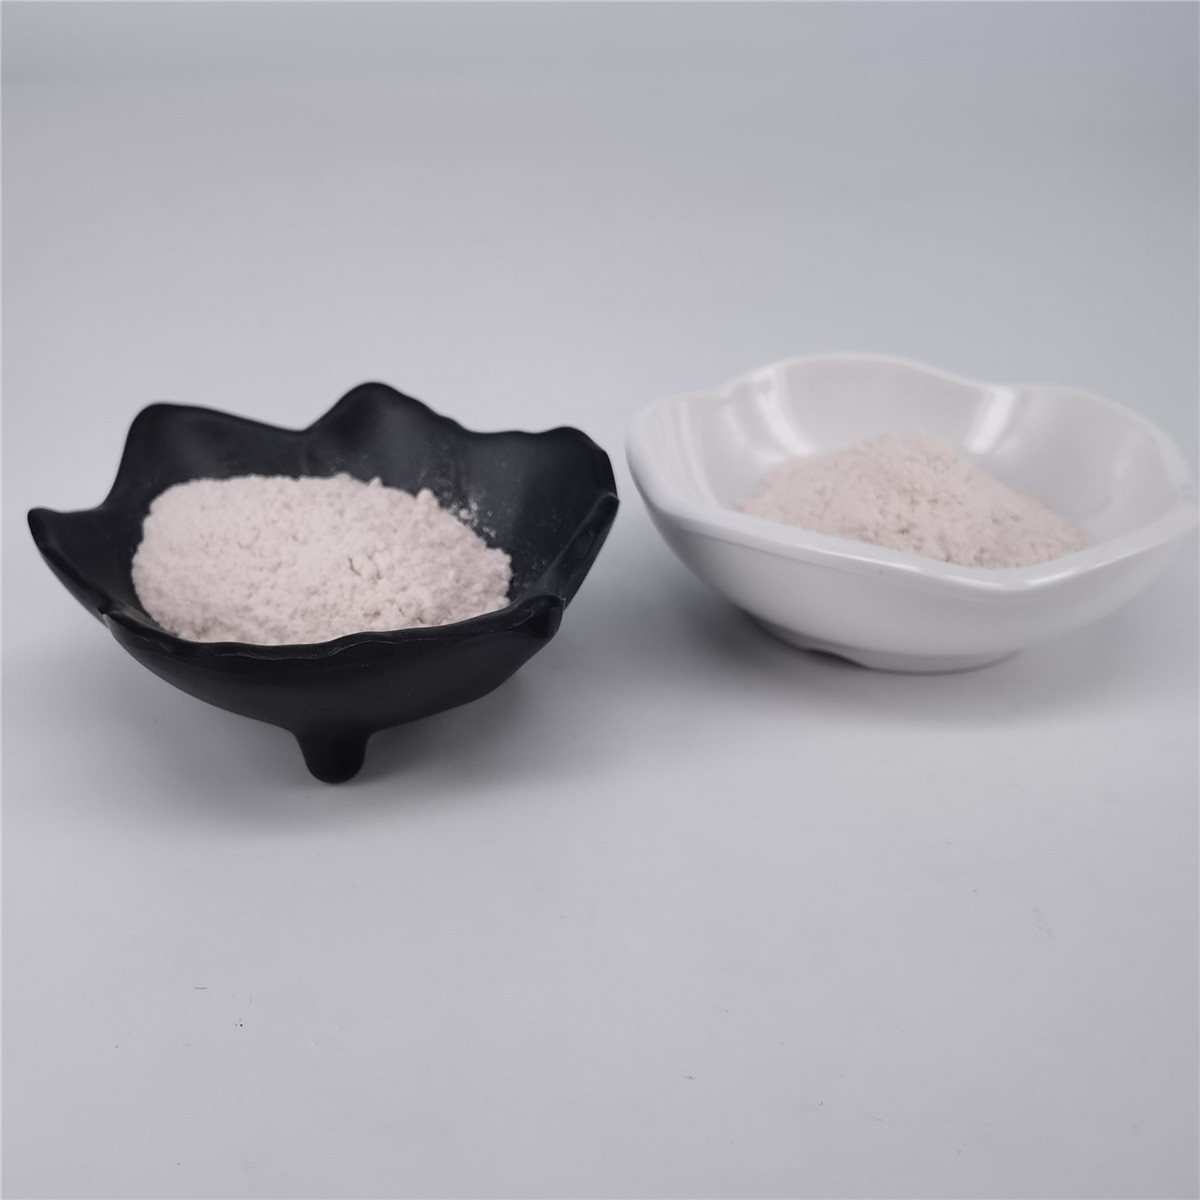  SOD Superoxide Dismutase Powder Cosmetic Grade Skincare Material Manufactures